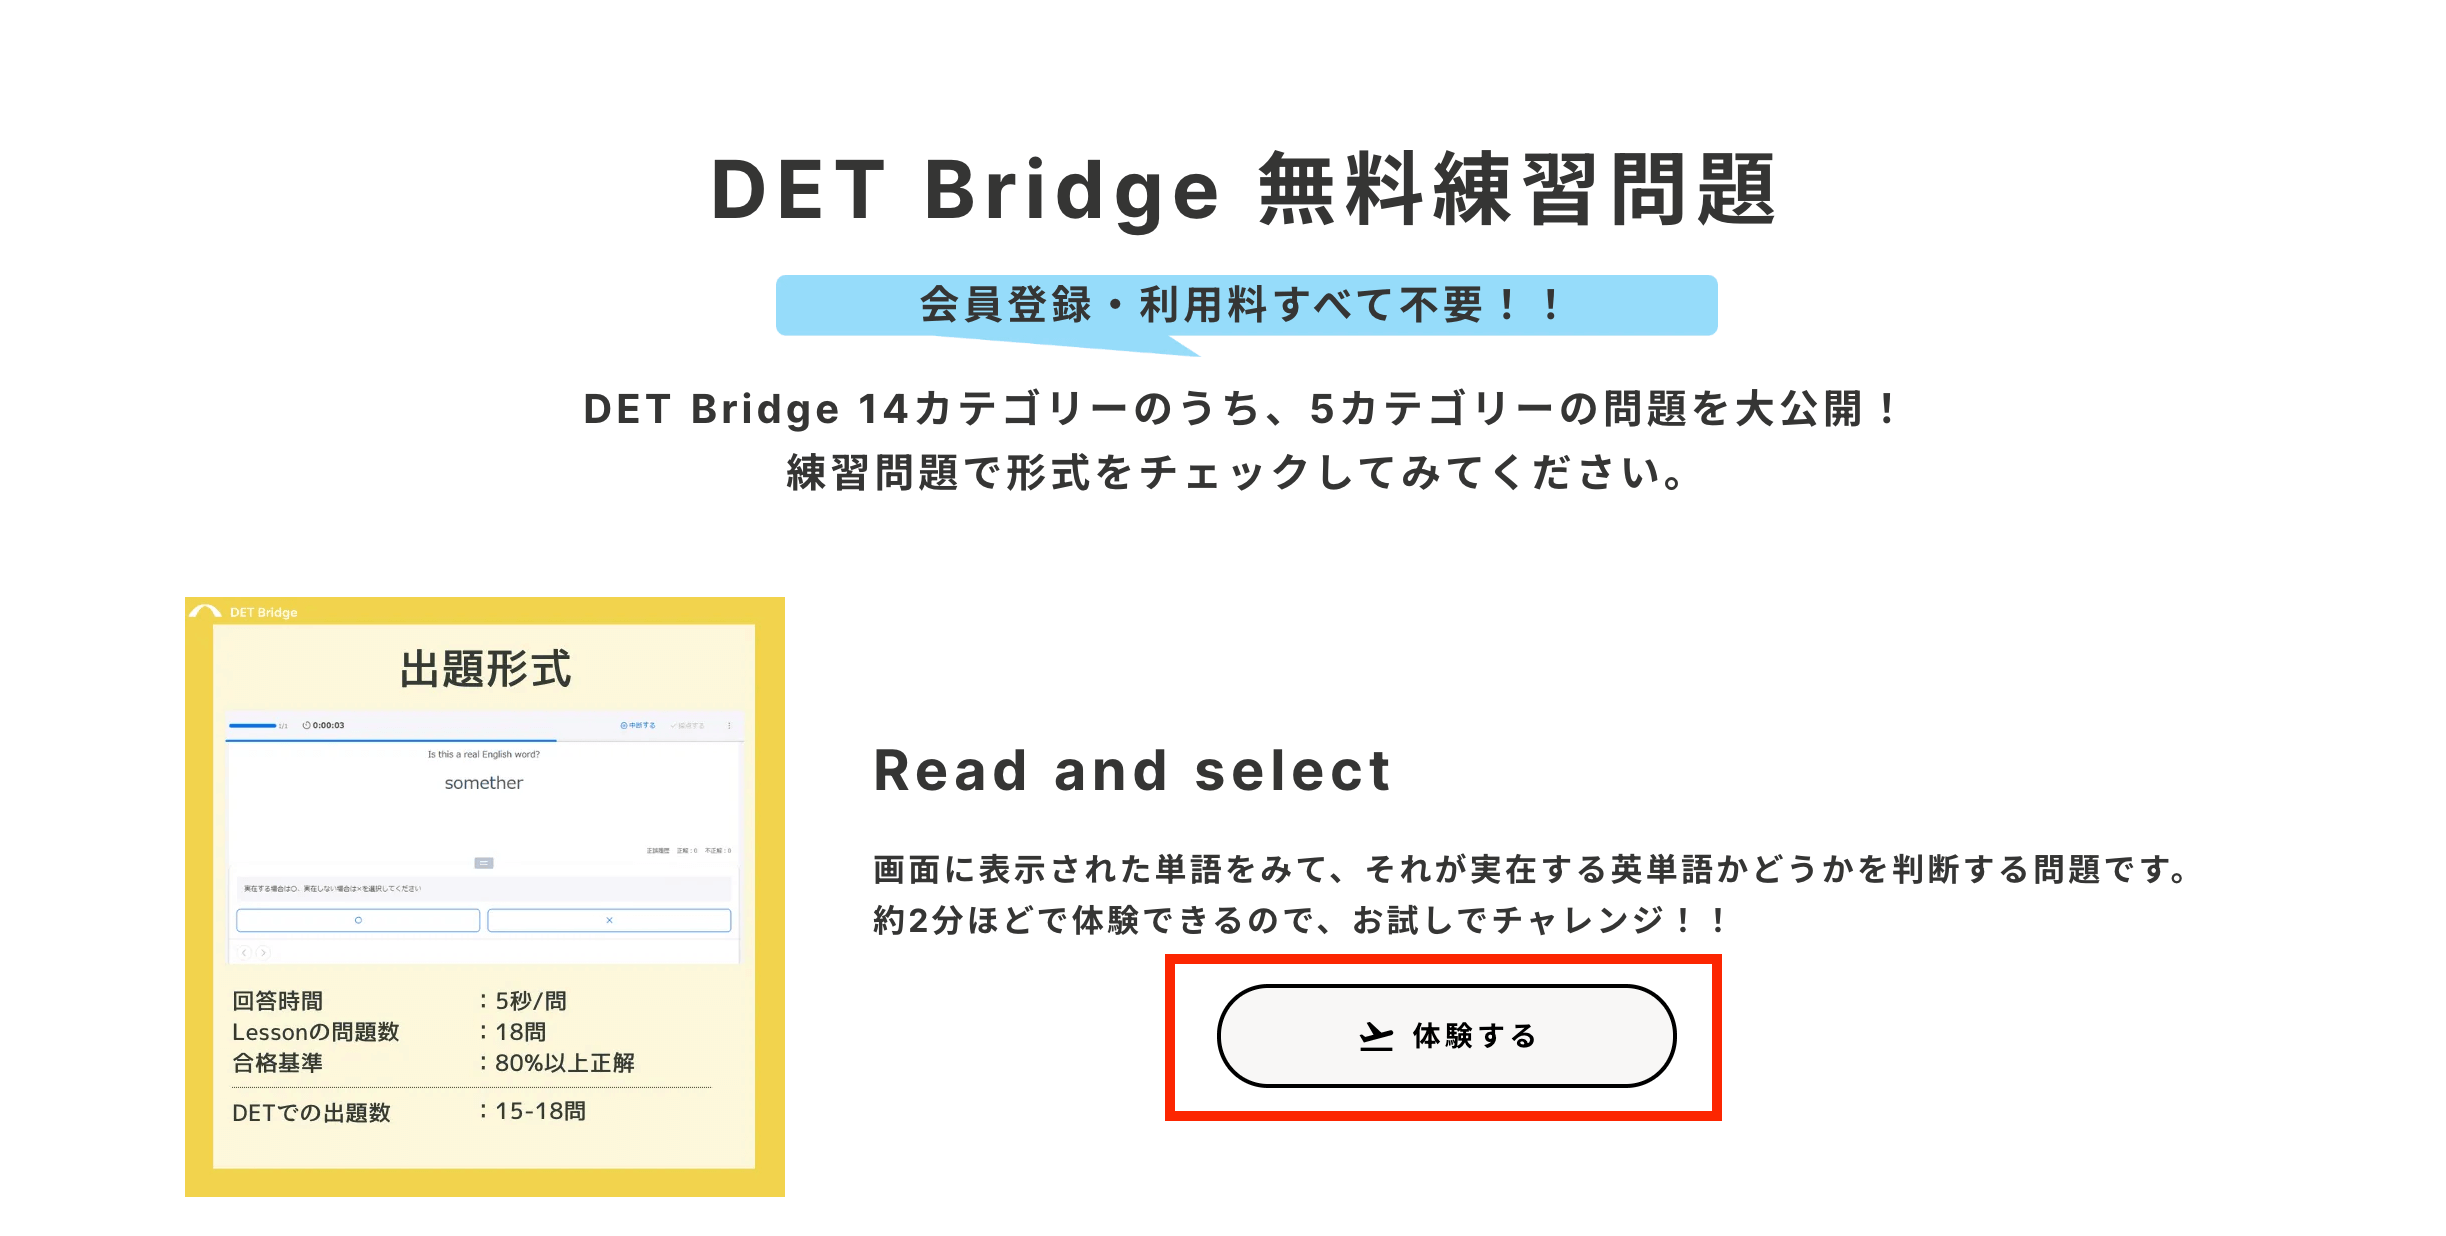 DET Bridge